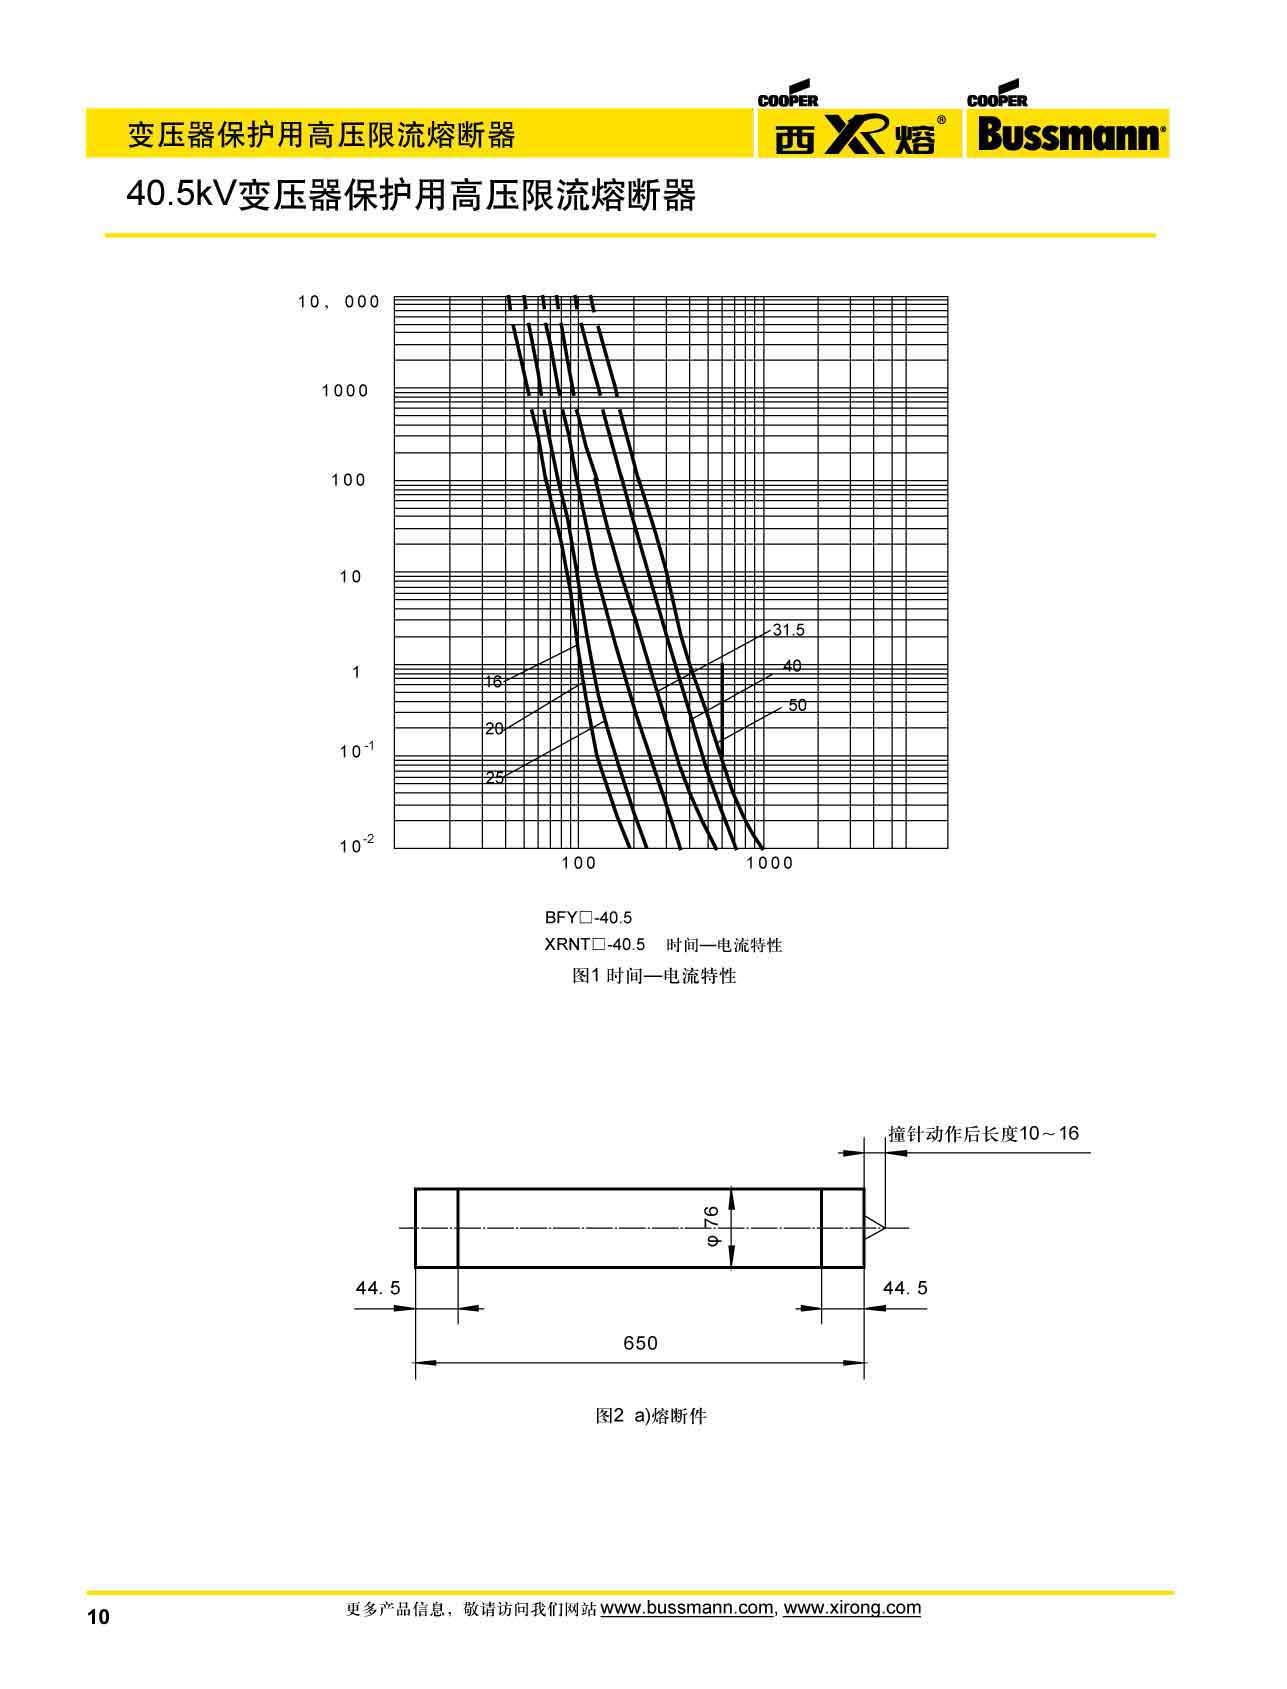 40.5kV變壓器保護用高壓限流熔斷器曲線圖